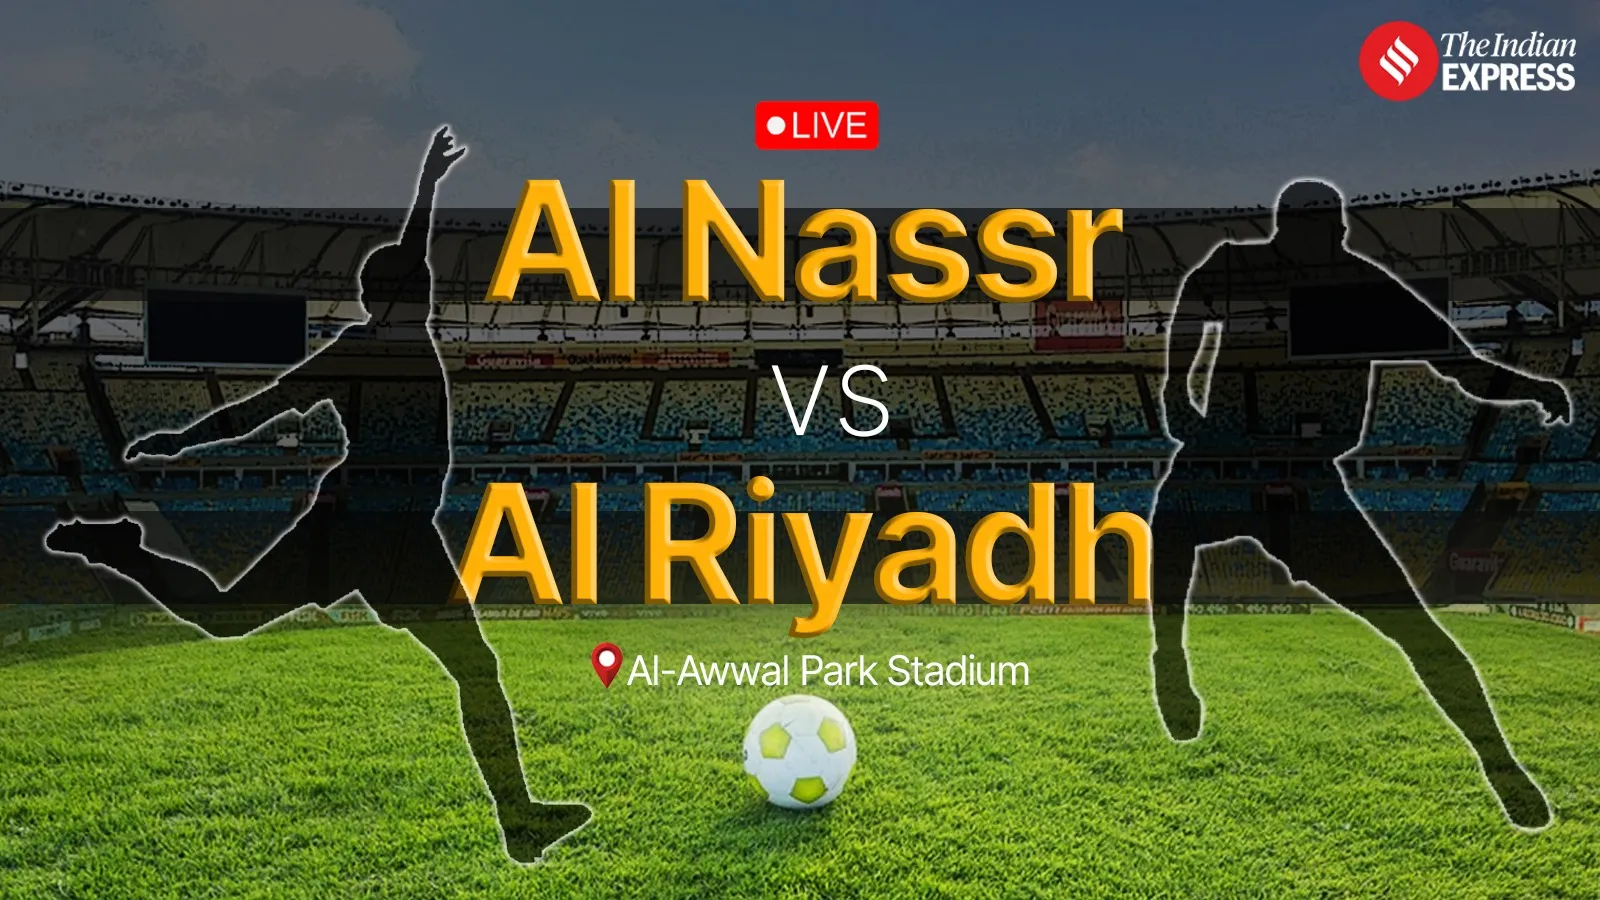 Al Nassr vs Al Riyadh Highlights: Cristiano Ronaldo scores one, assists another as Al Nassr win 4-1 - The Indian Express